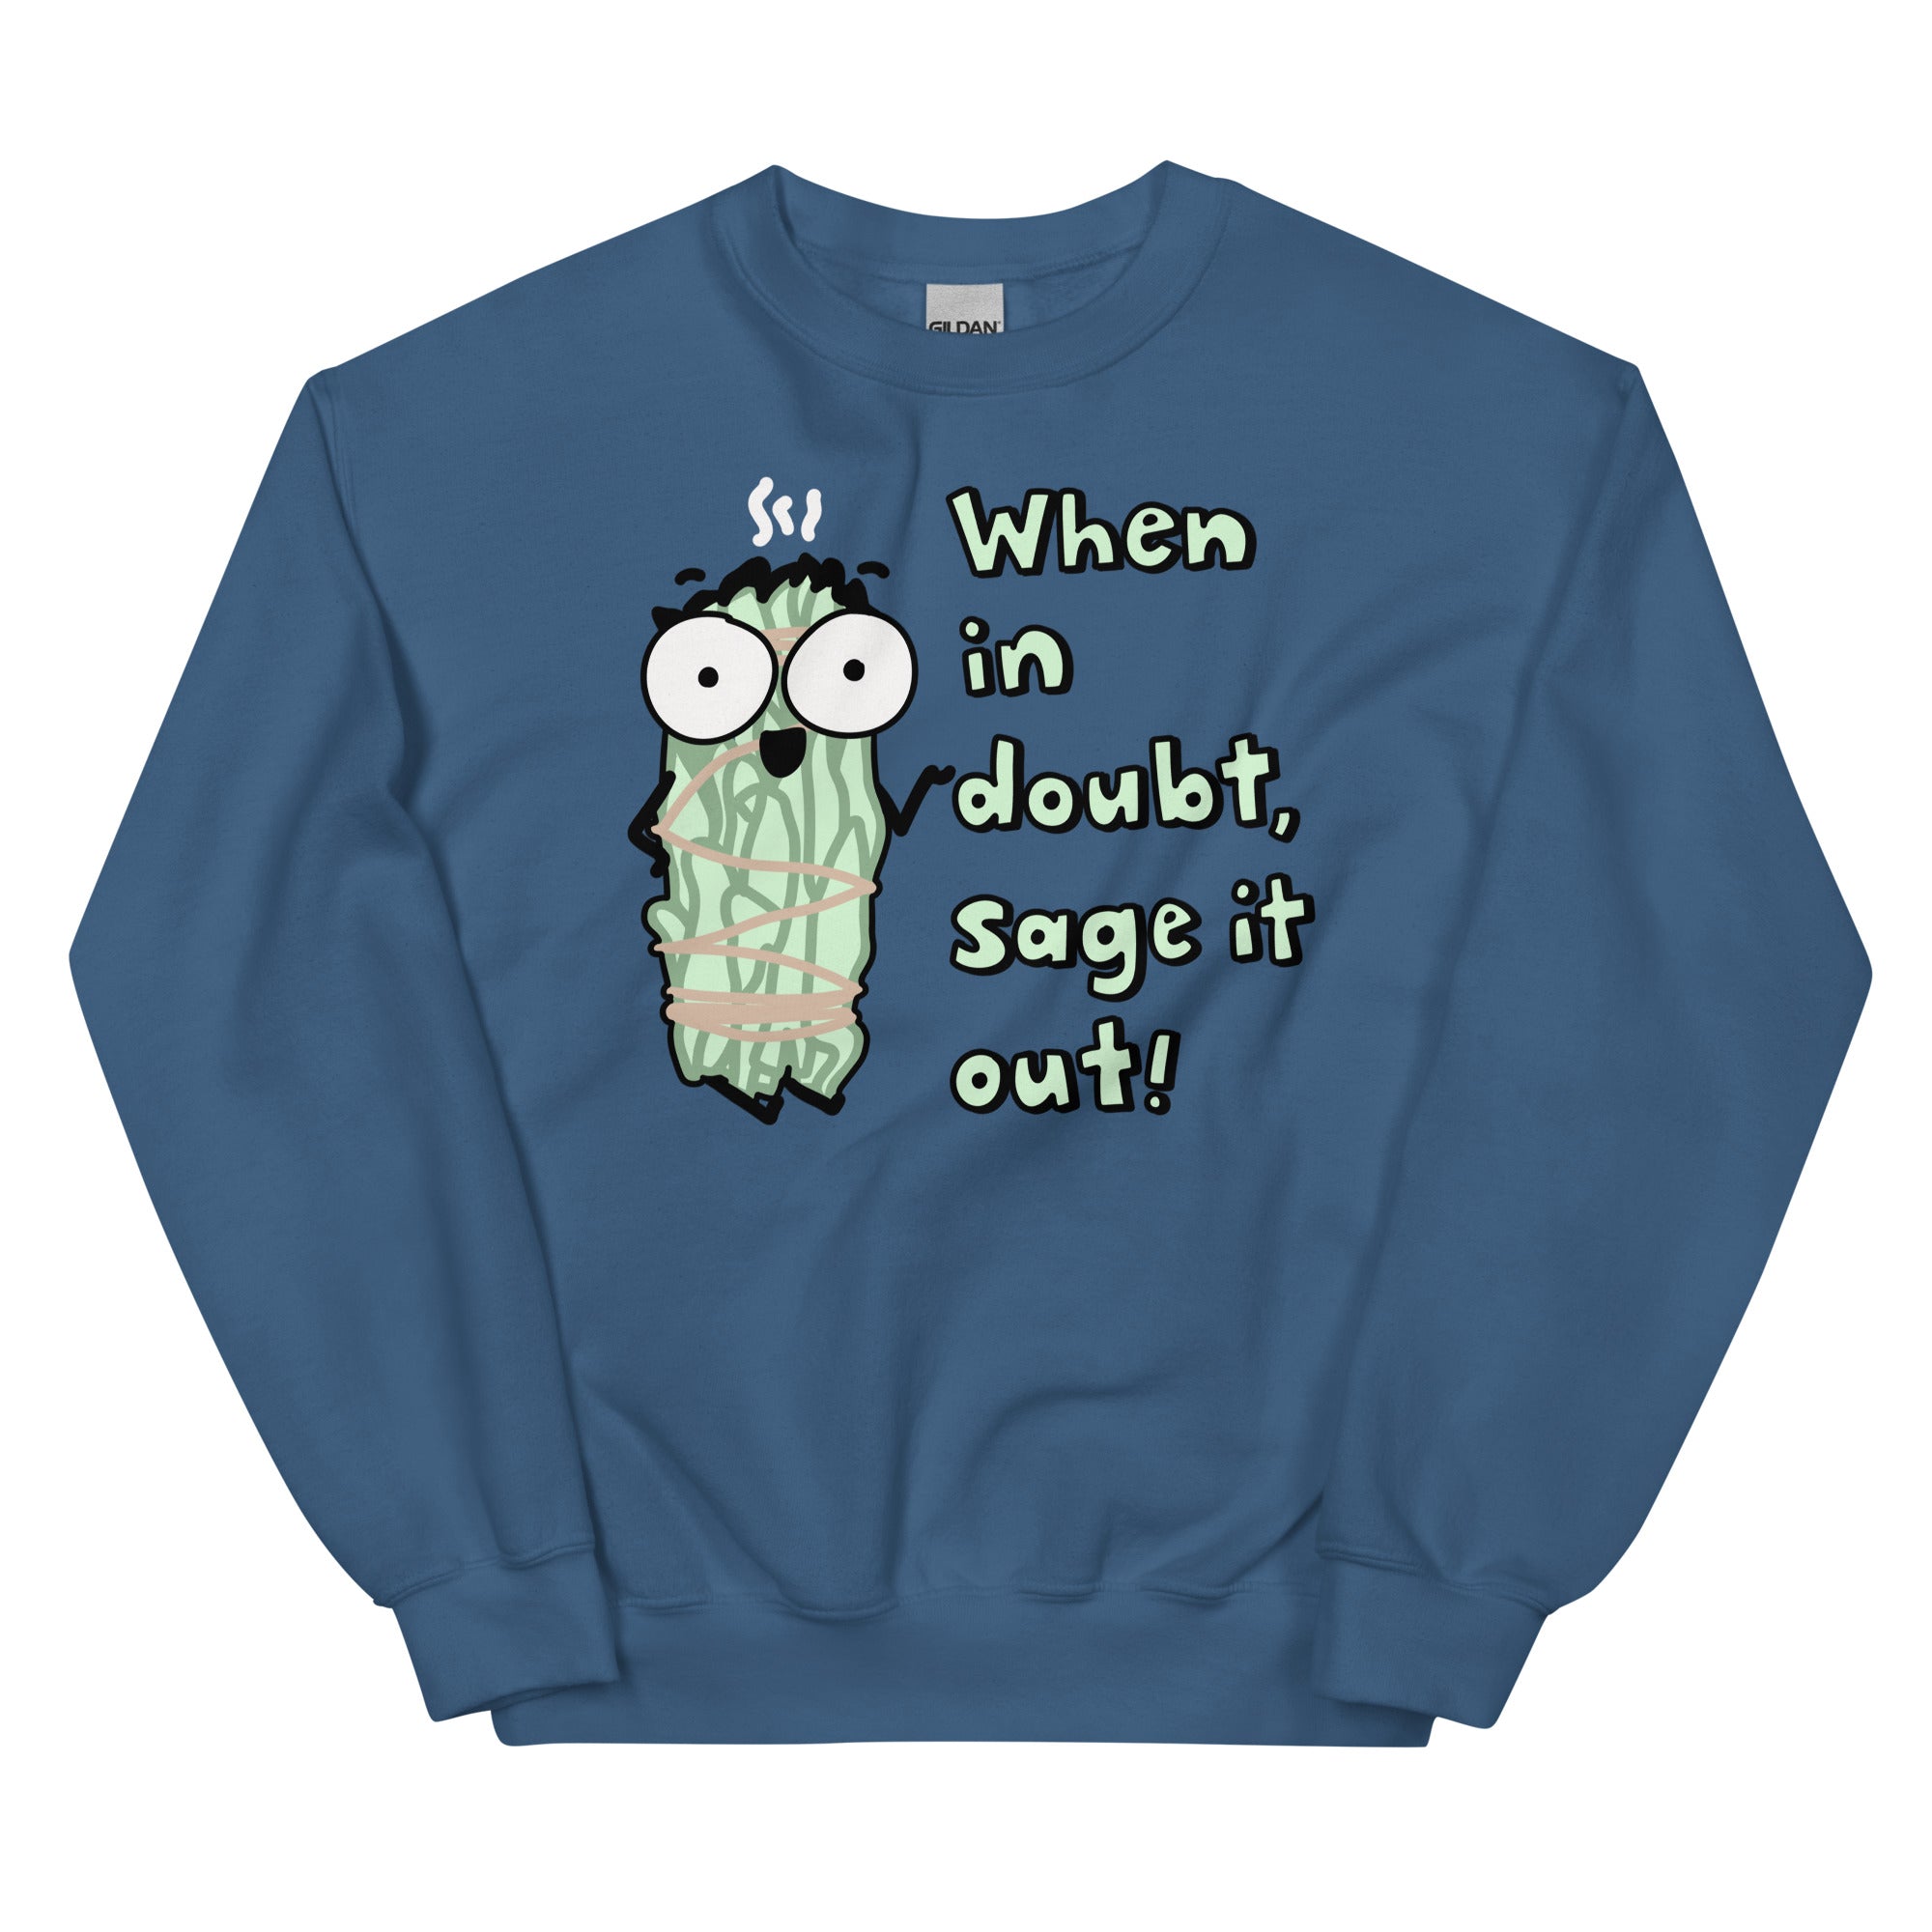 Sage sweatshirt when in doubt sage it out shirt